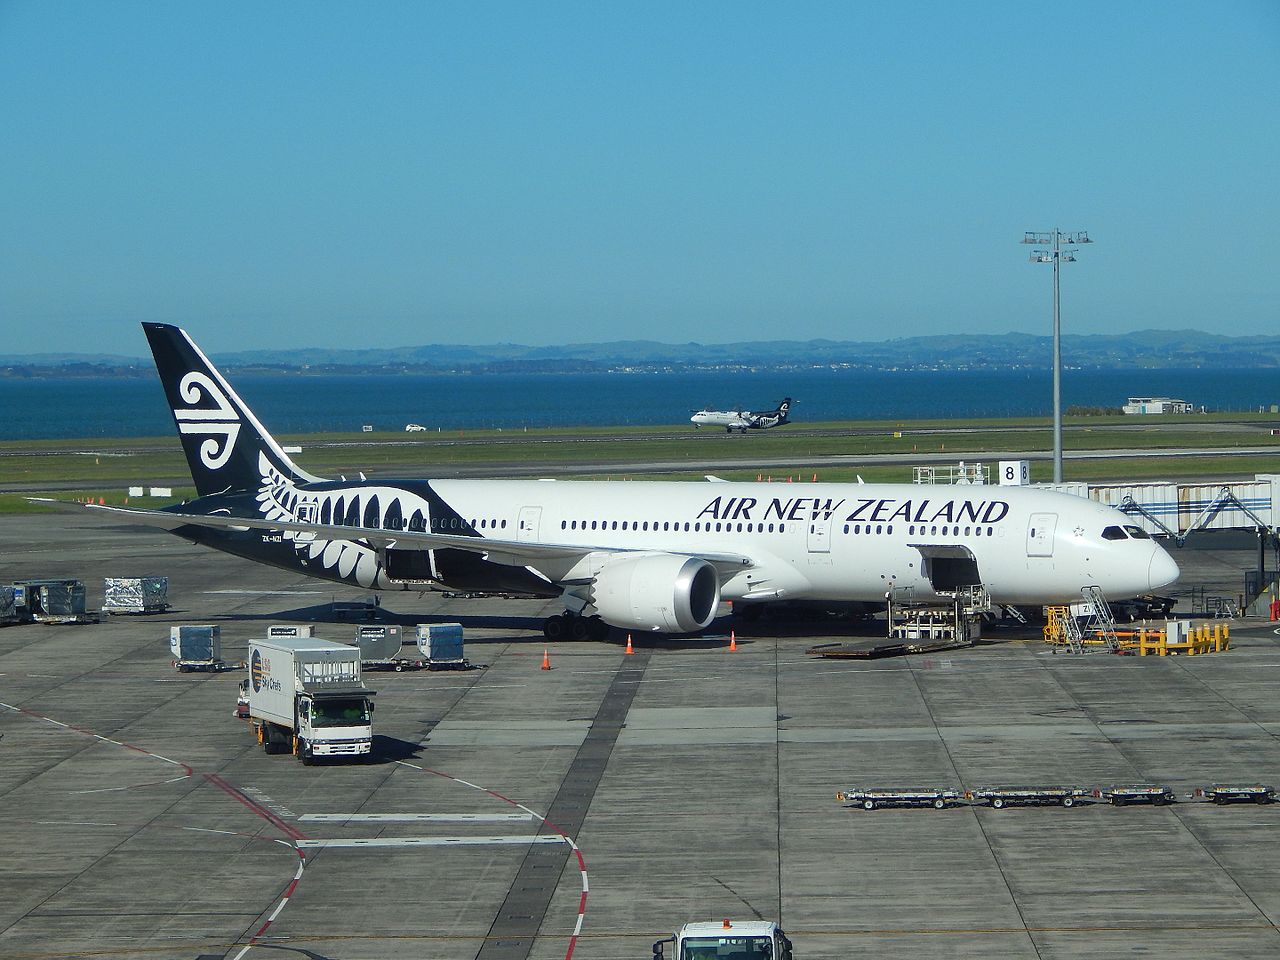 Air New Zealand aircraft at Auckland Airport.